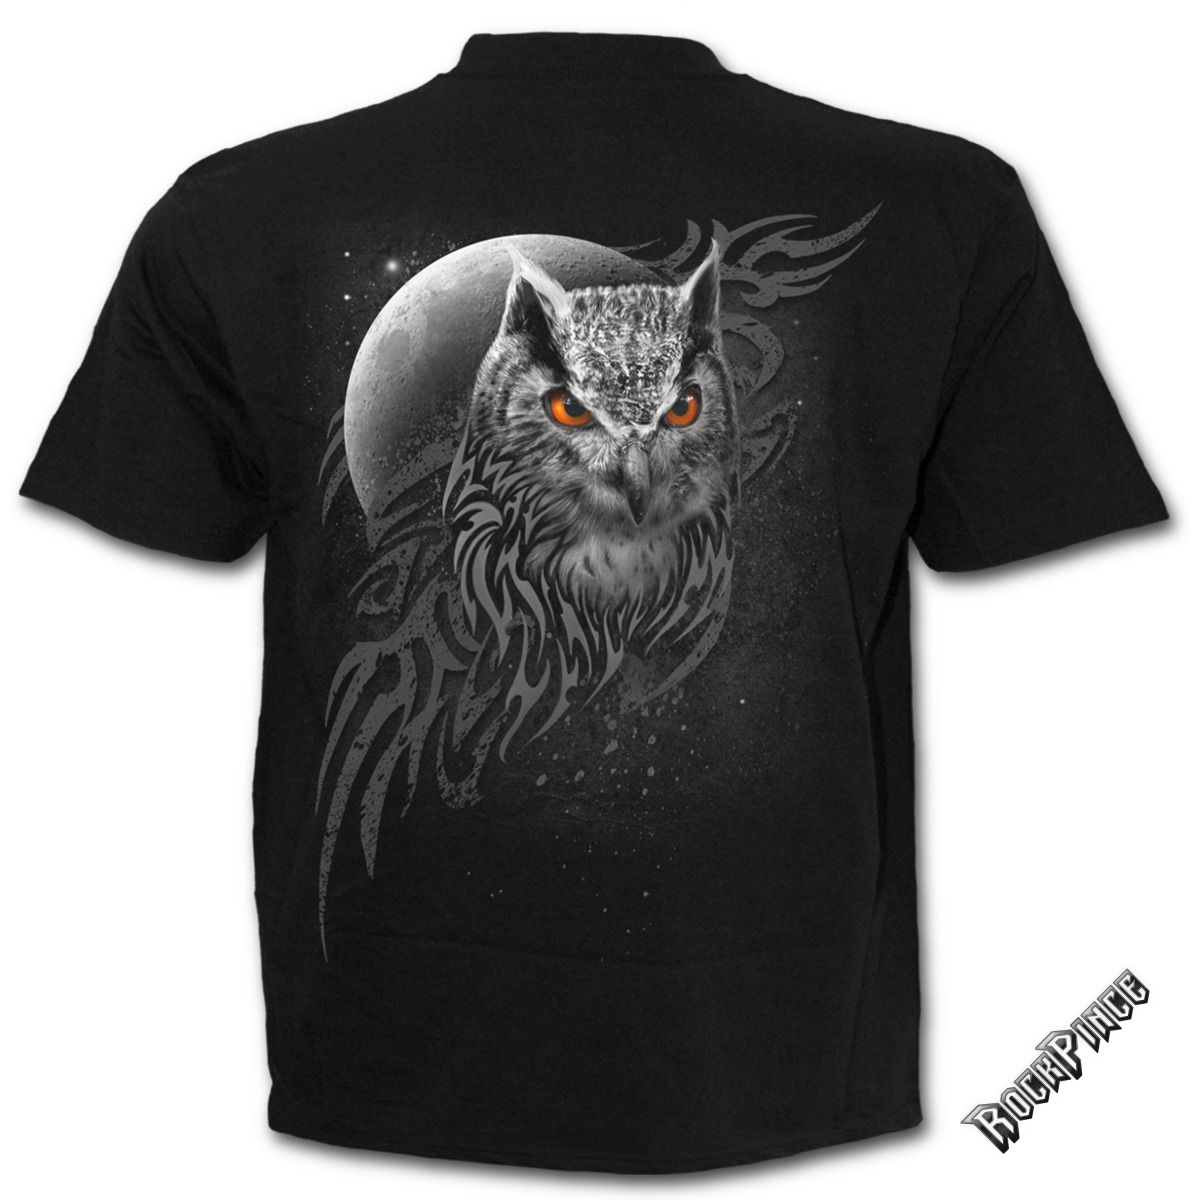 WINGS OF WISDOM - T-Shirt Black - E022M101